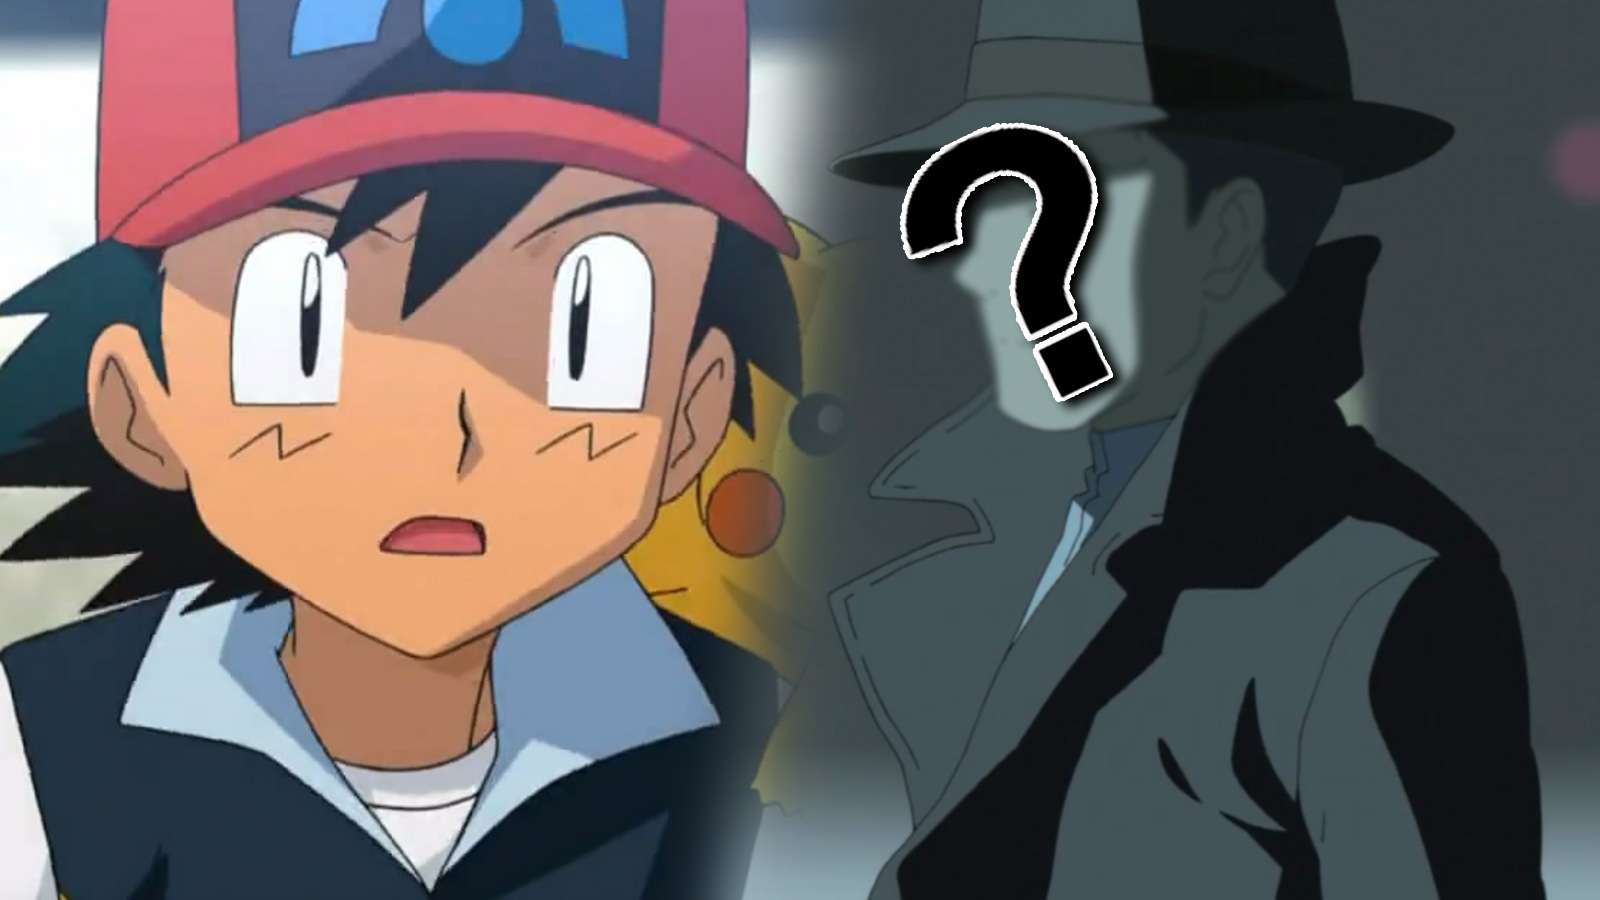 Screenshot of Pokemon protagonist Ash Ketchum next to mysterious man.